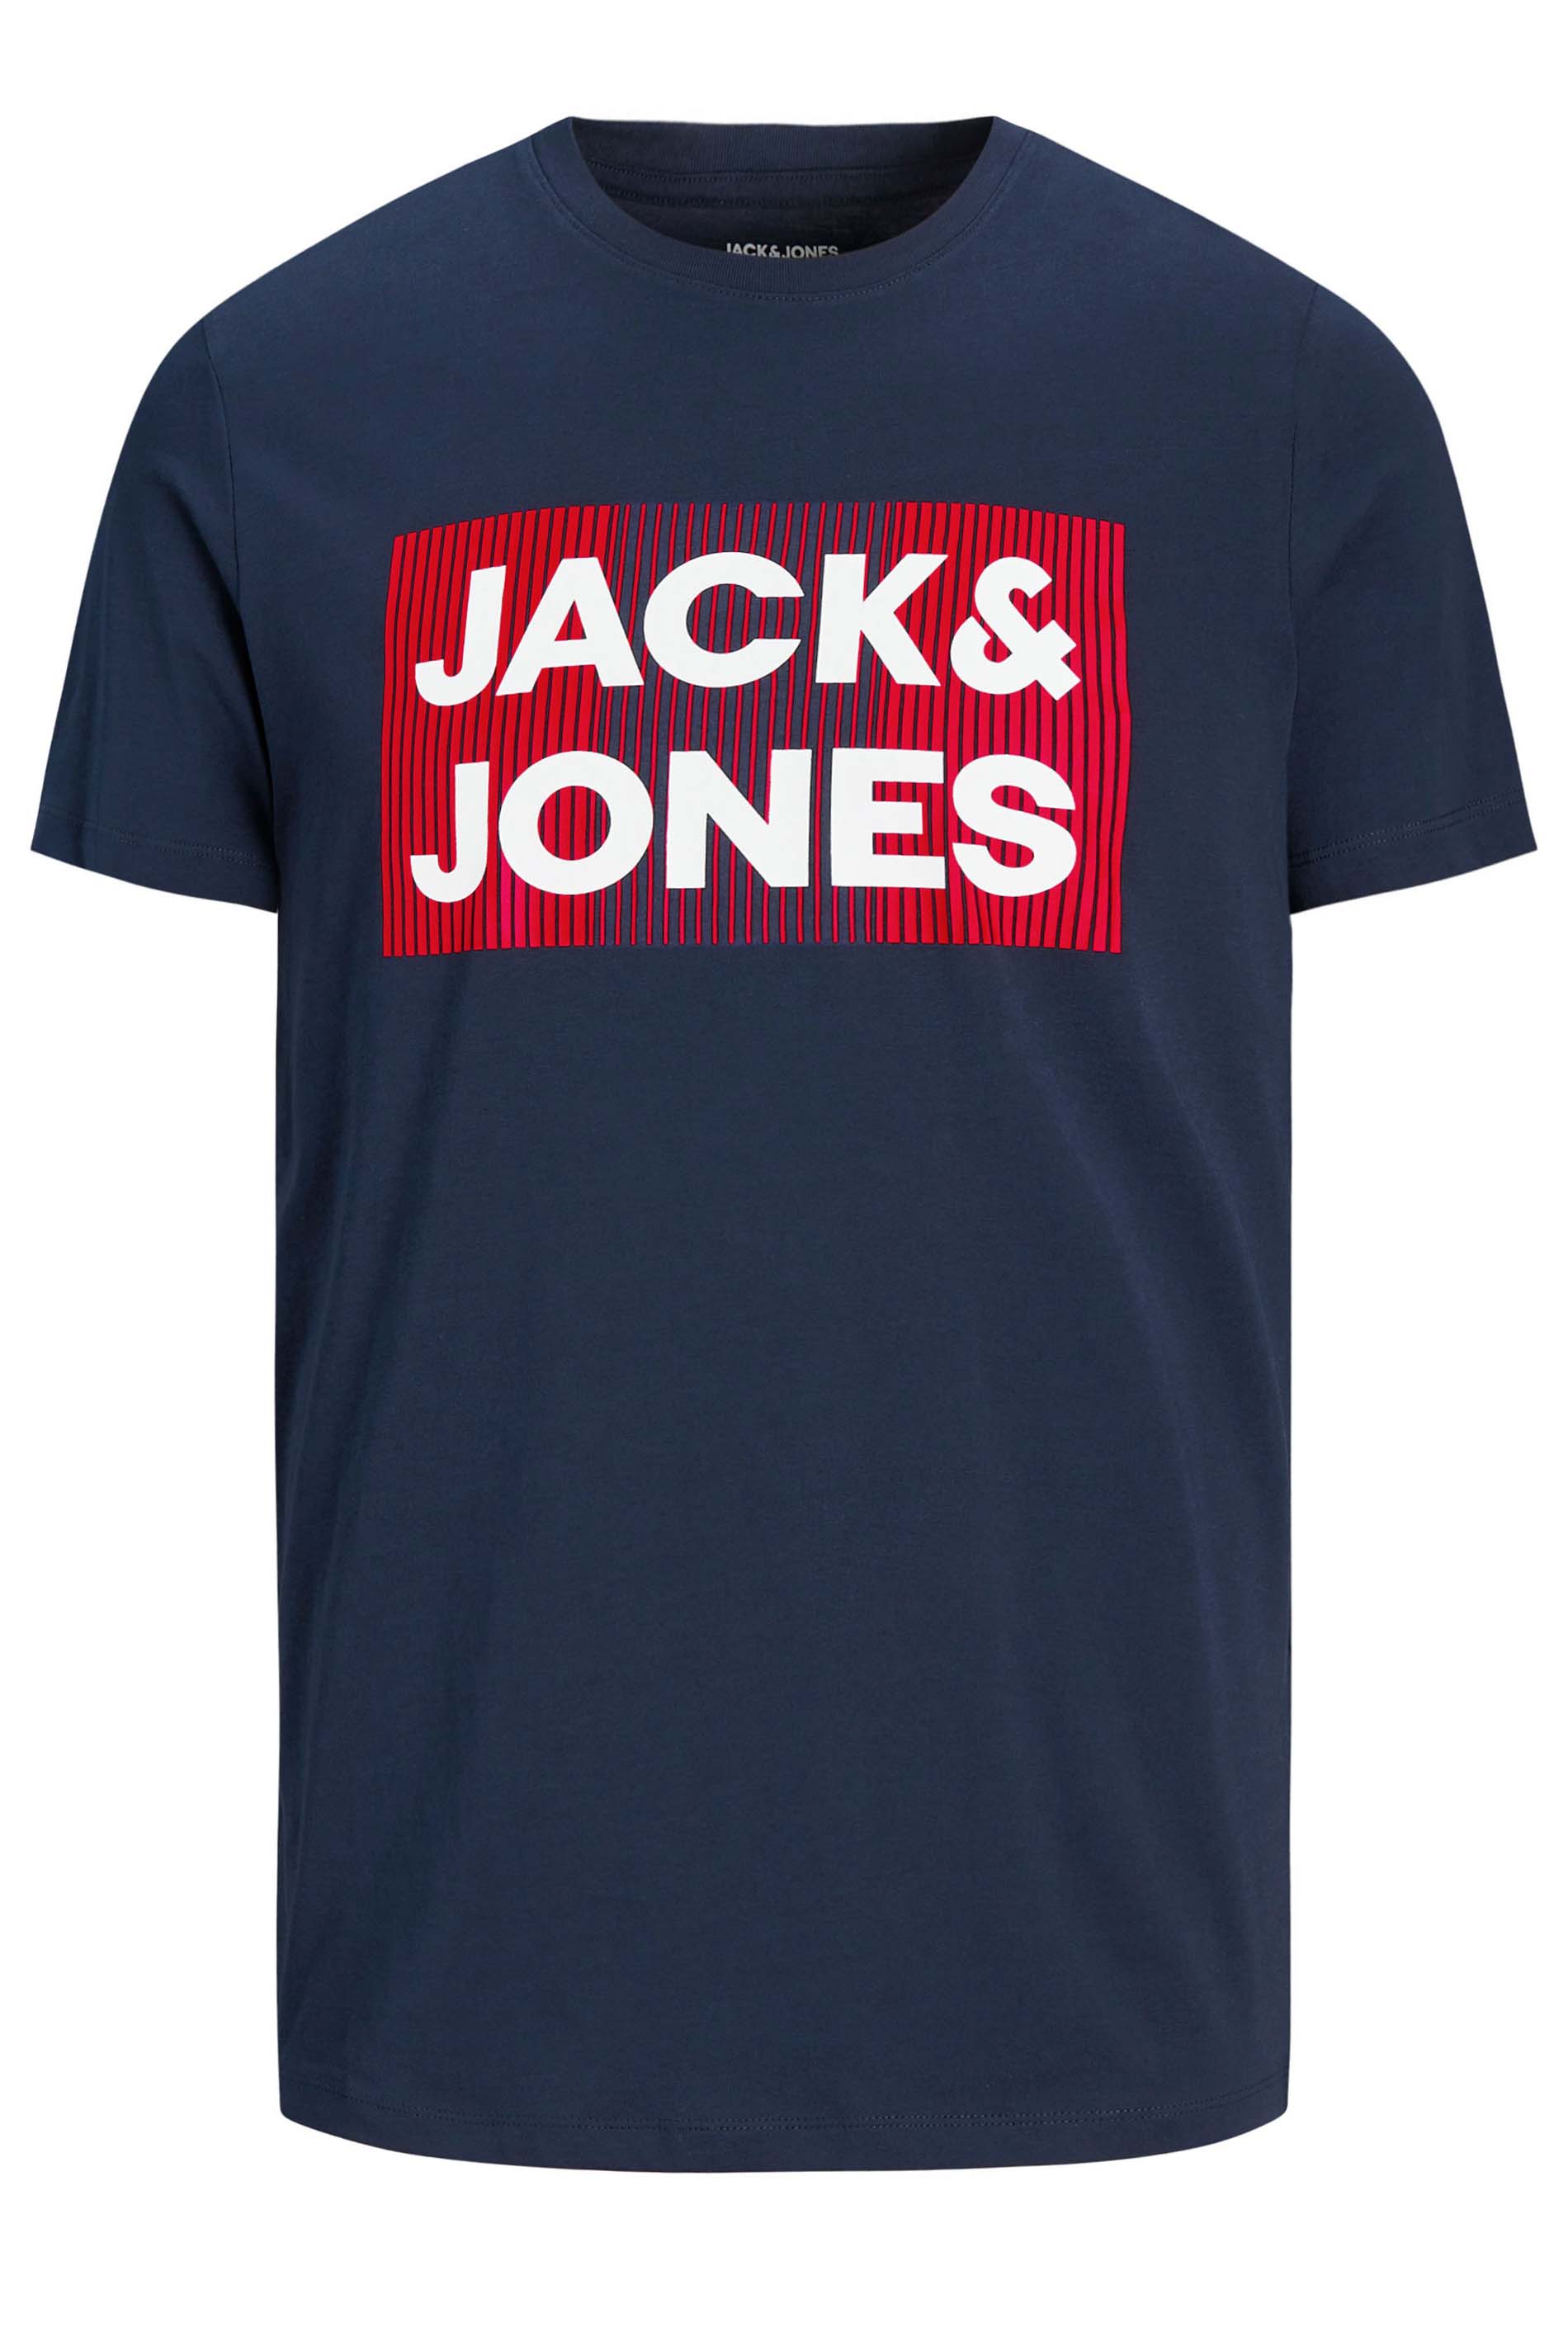 JACK & JONES Navy Logo Crew Neck T-Shirt | BadRhino 2